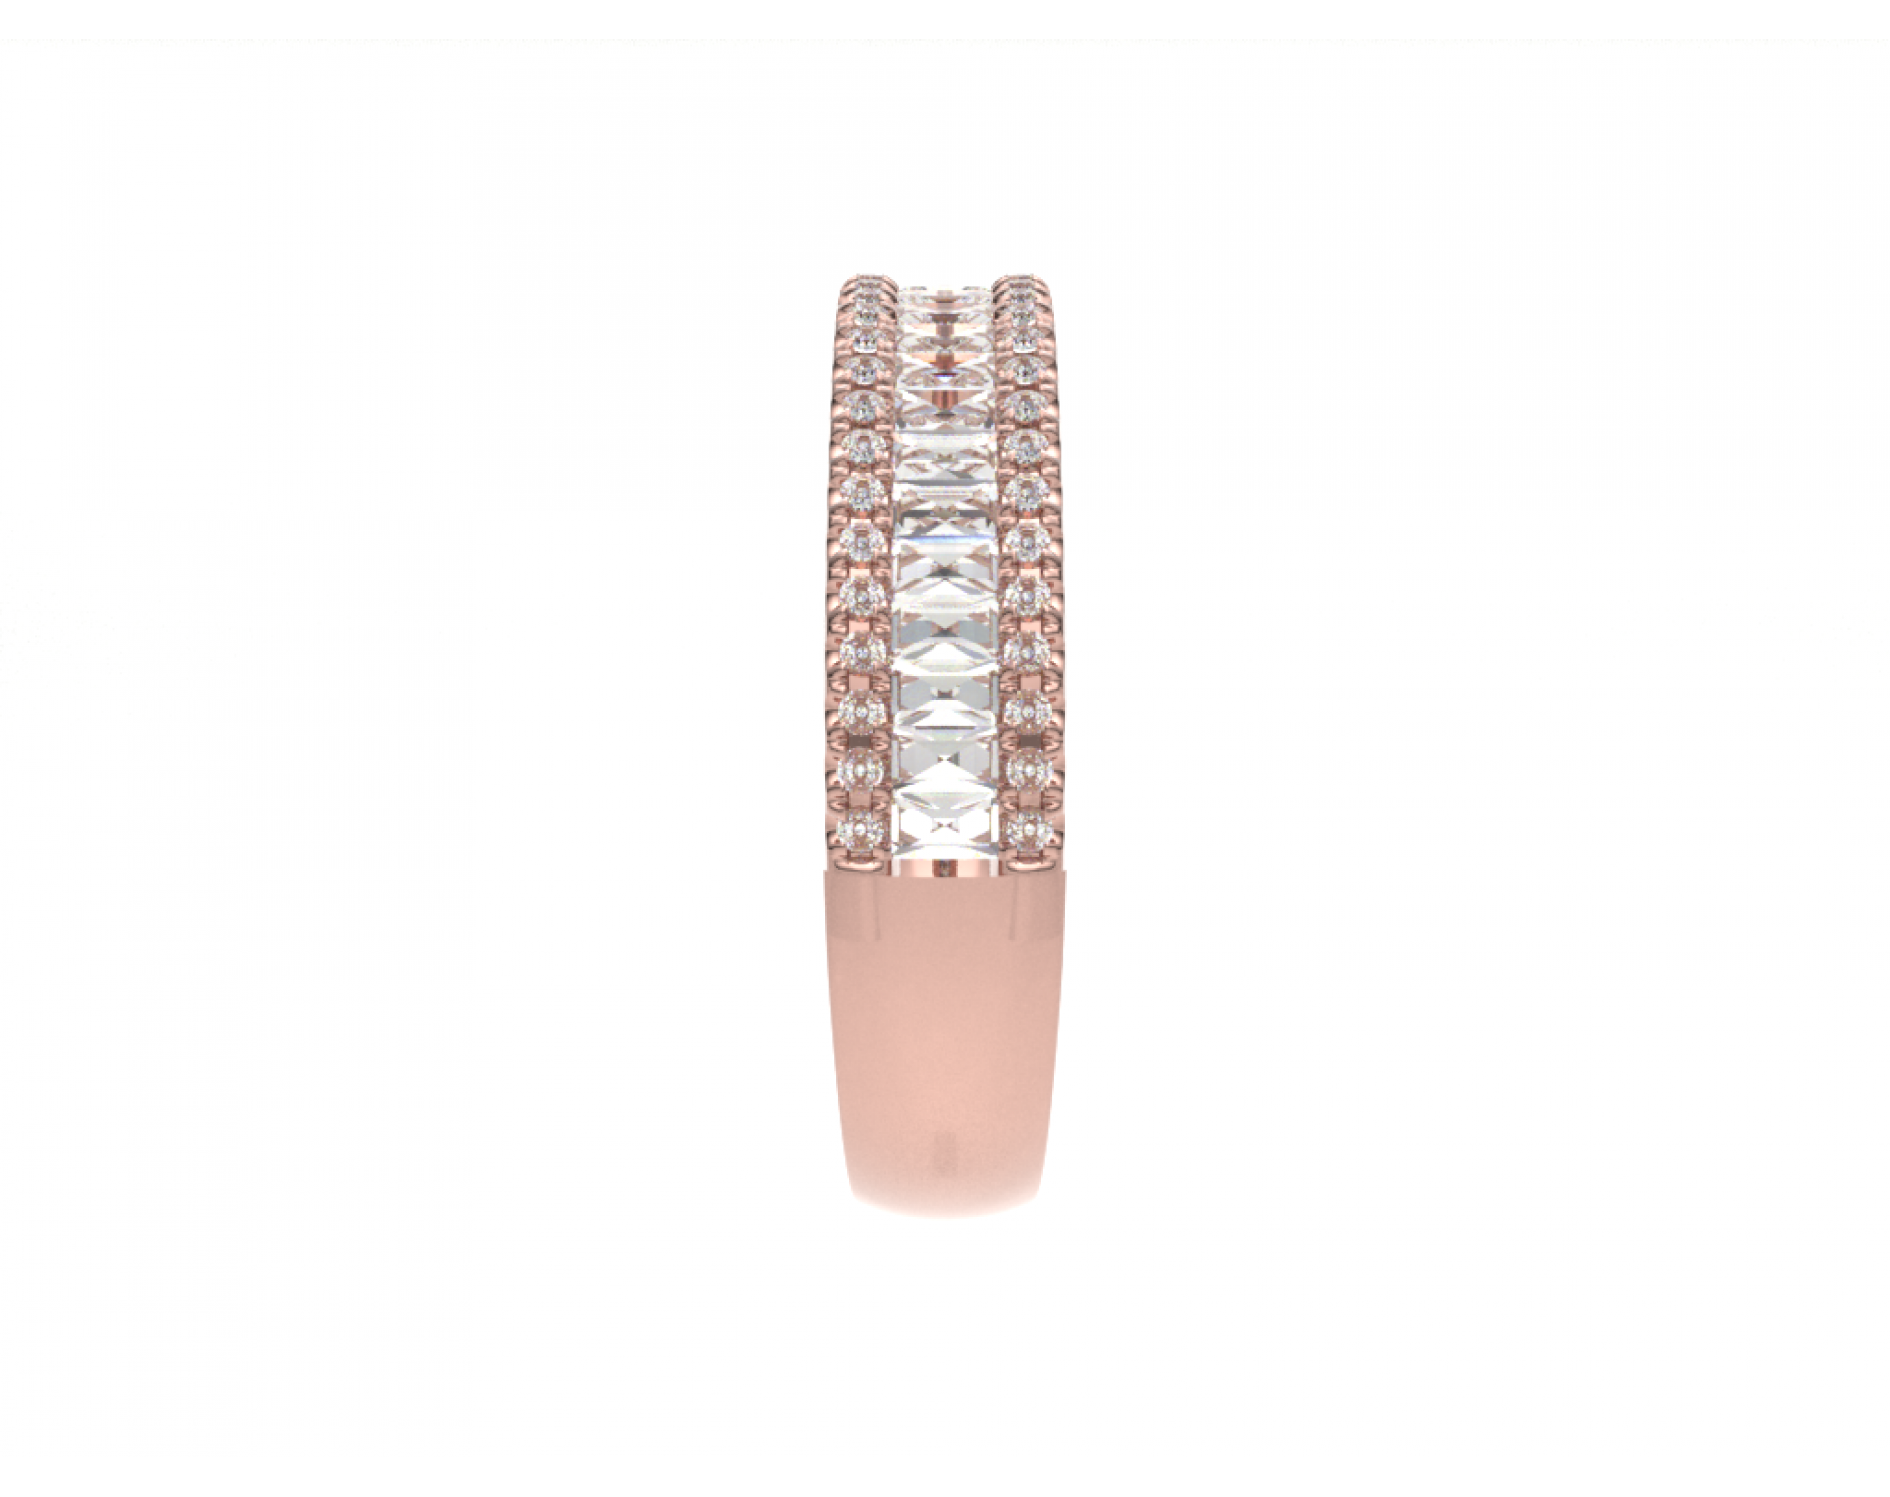 18k rose gold multirow round & baguette diamond ring